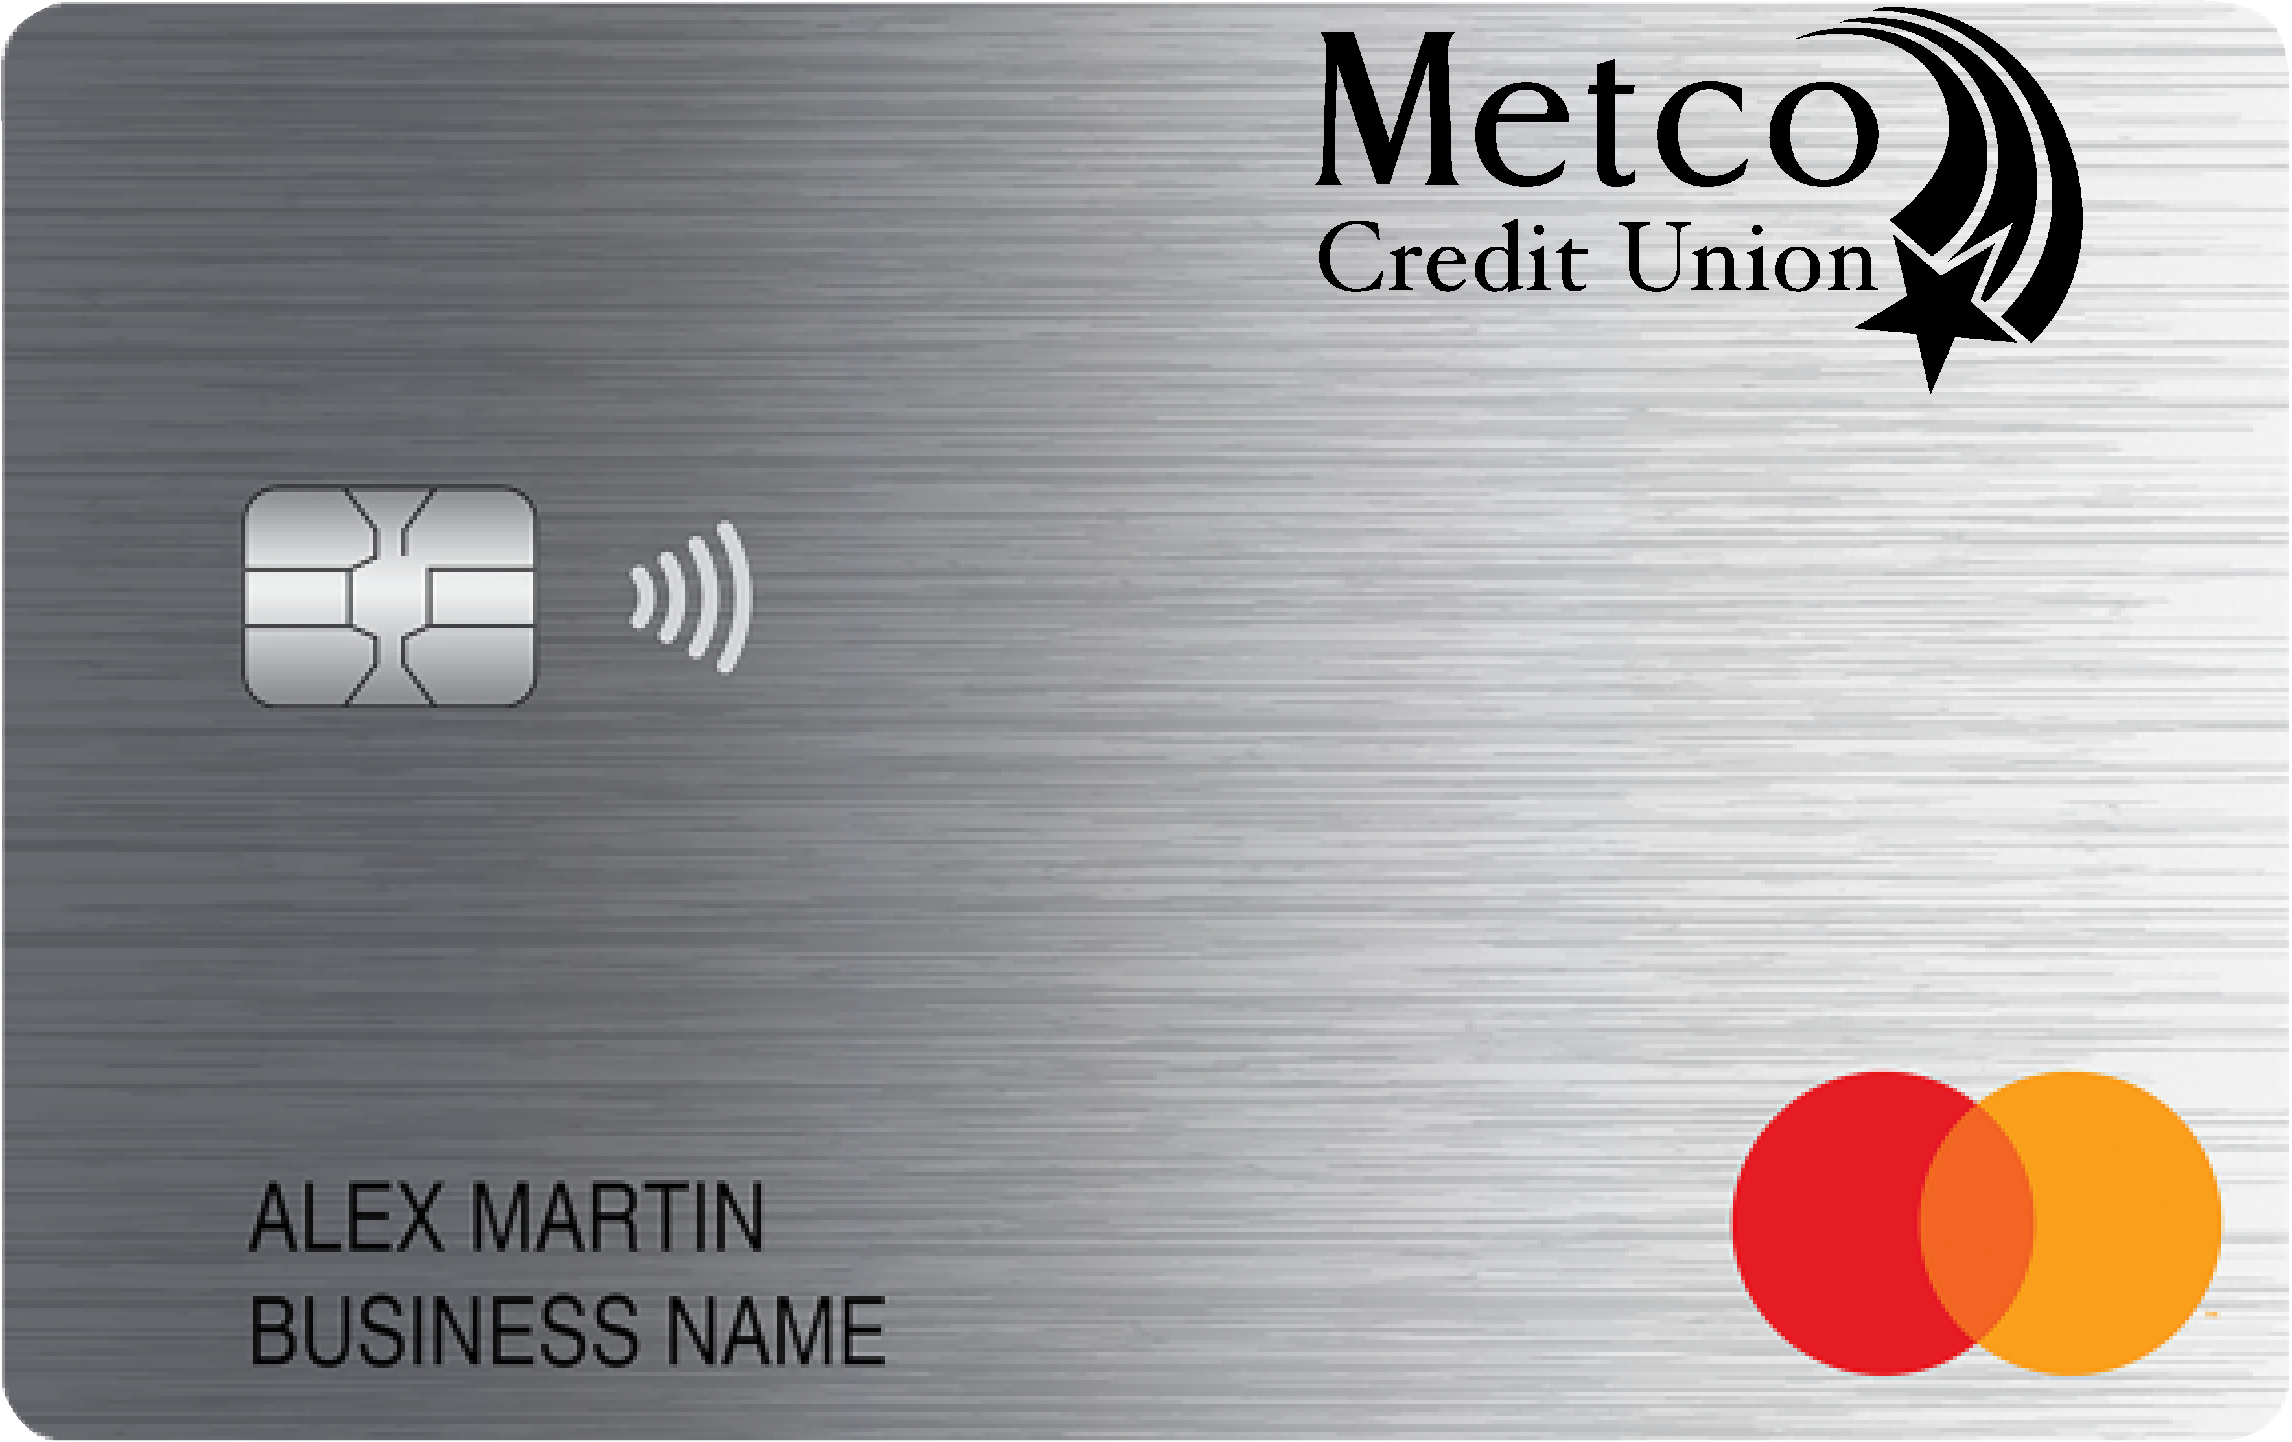 Metco Credit Union Smart Business Rewards Card